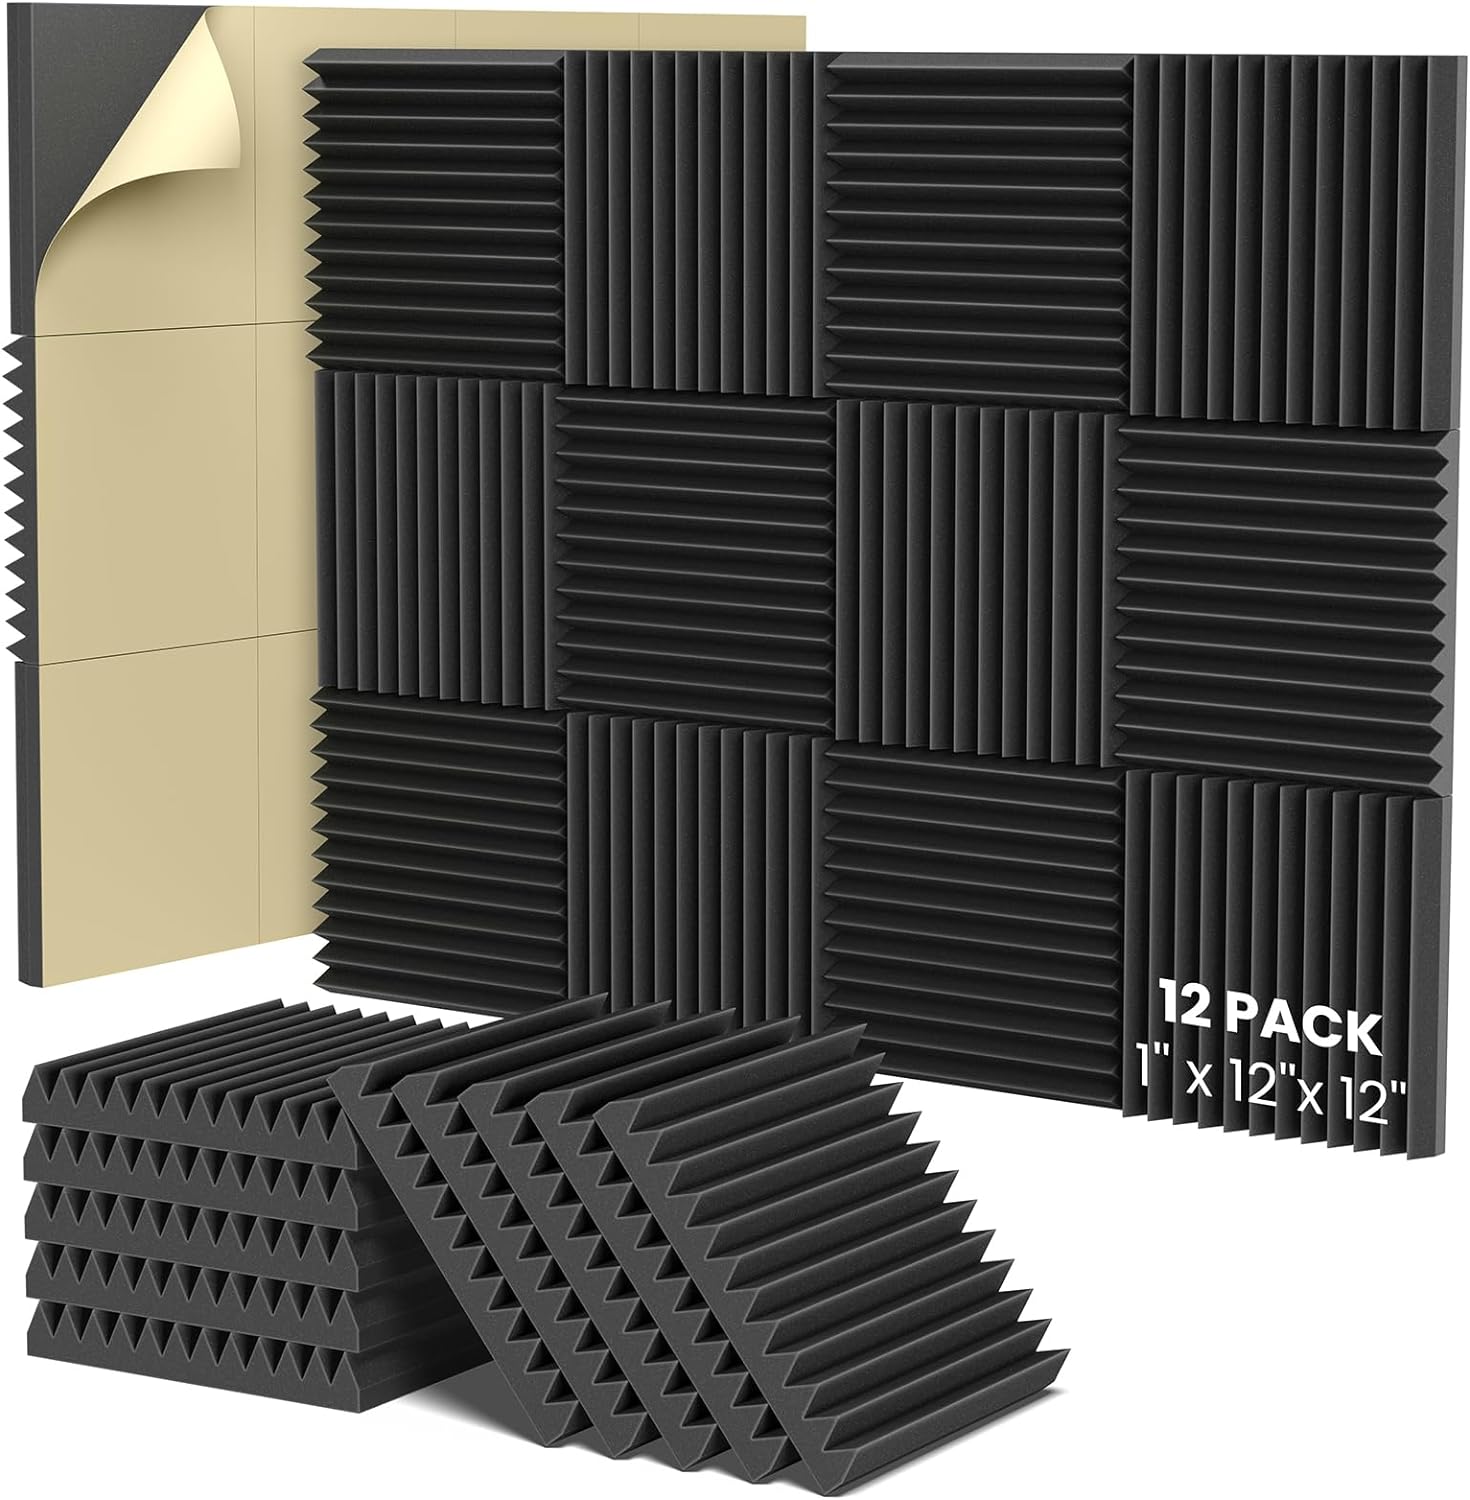 hemrly acoustic foam panels1 x 12 x 12 self adhesive sound proof foam panelsacoustic panels absorb noise quicklyhigh den 5